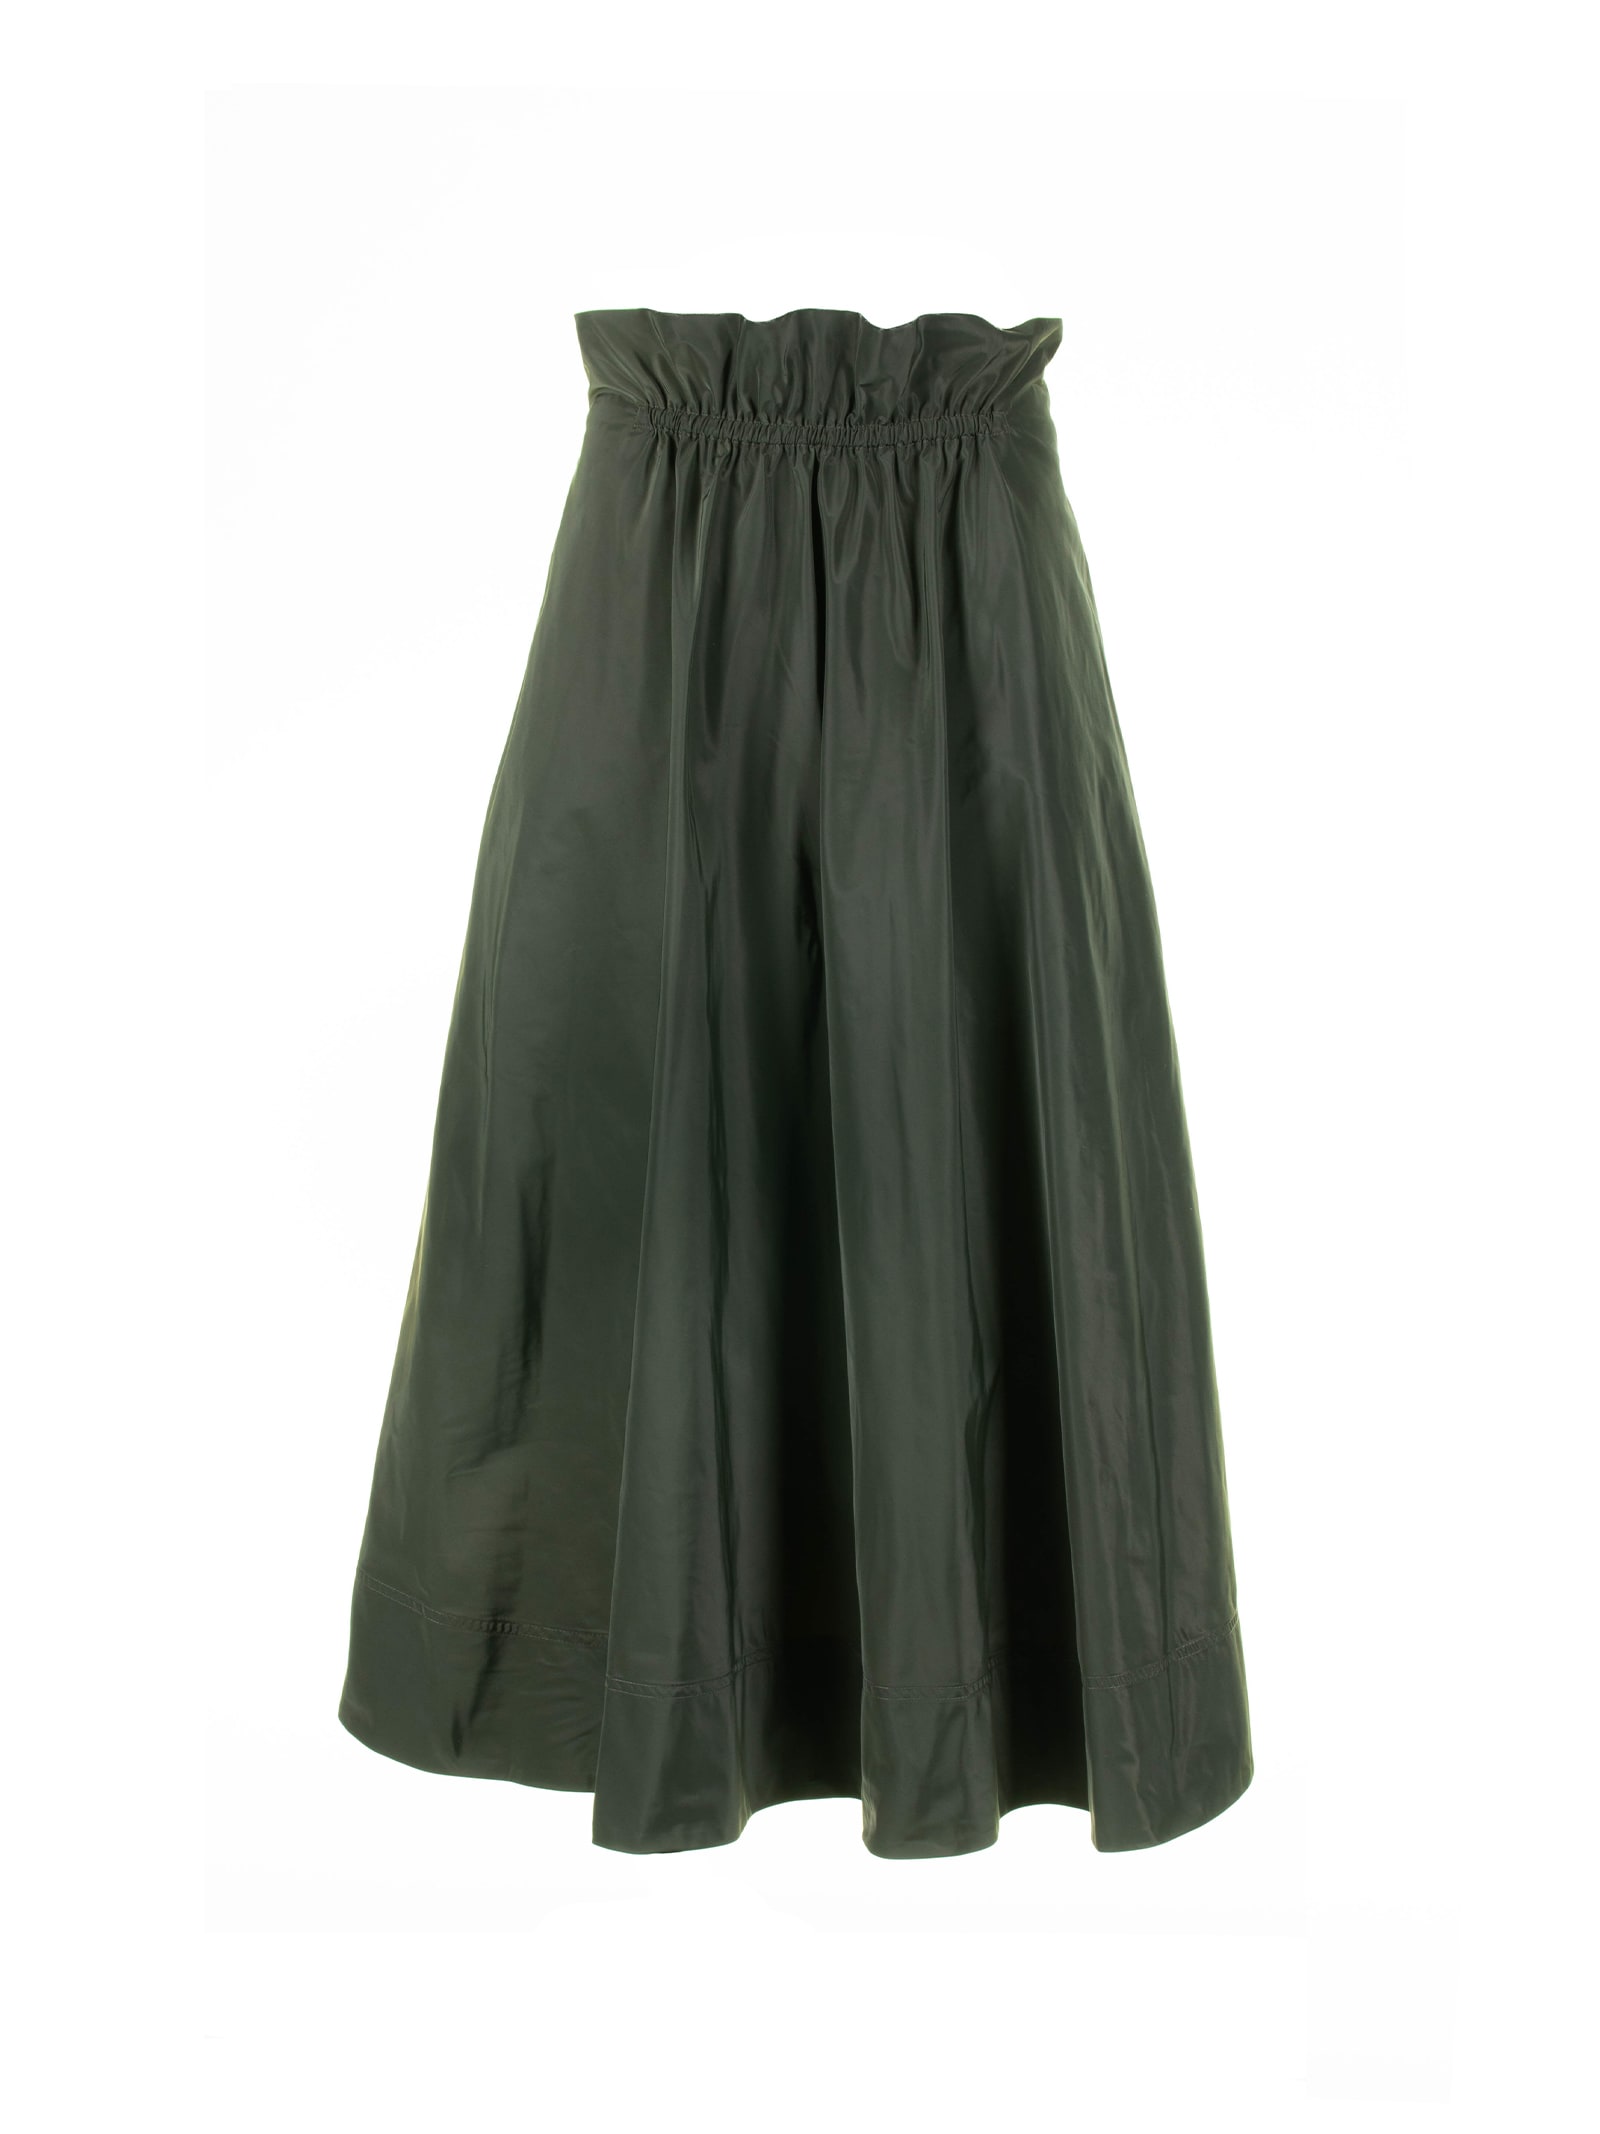 Long Green Gathered Skirt